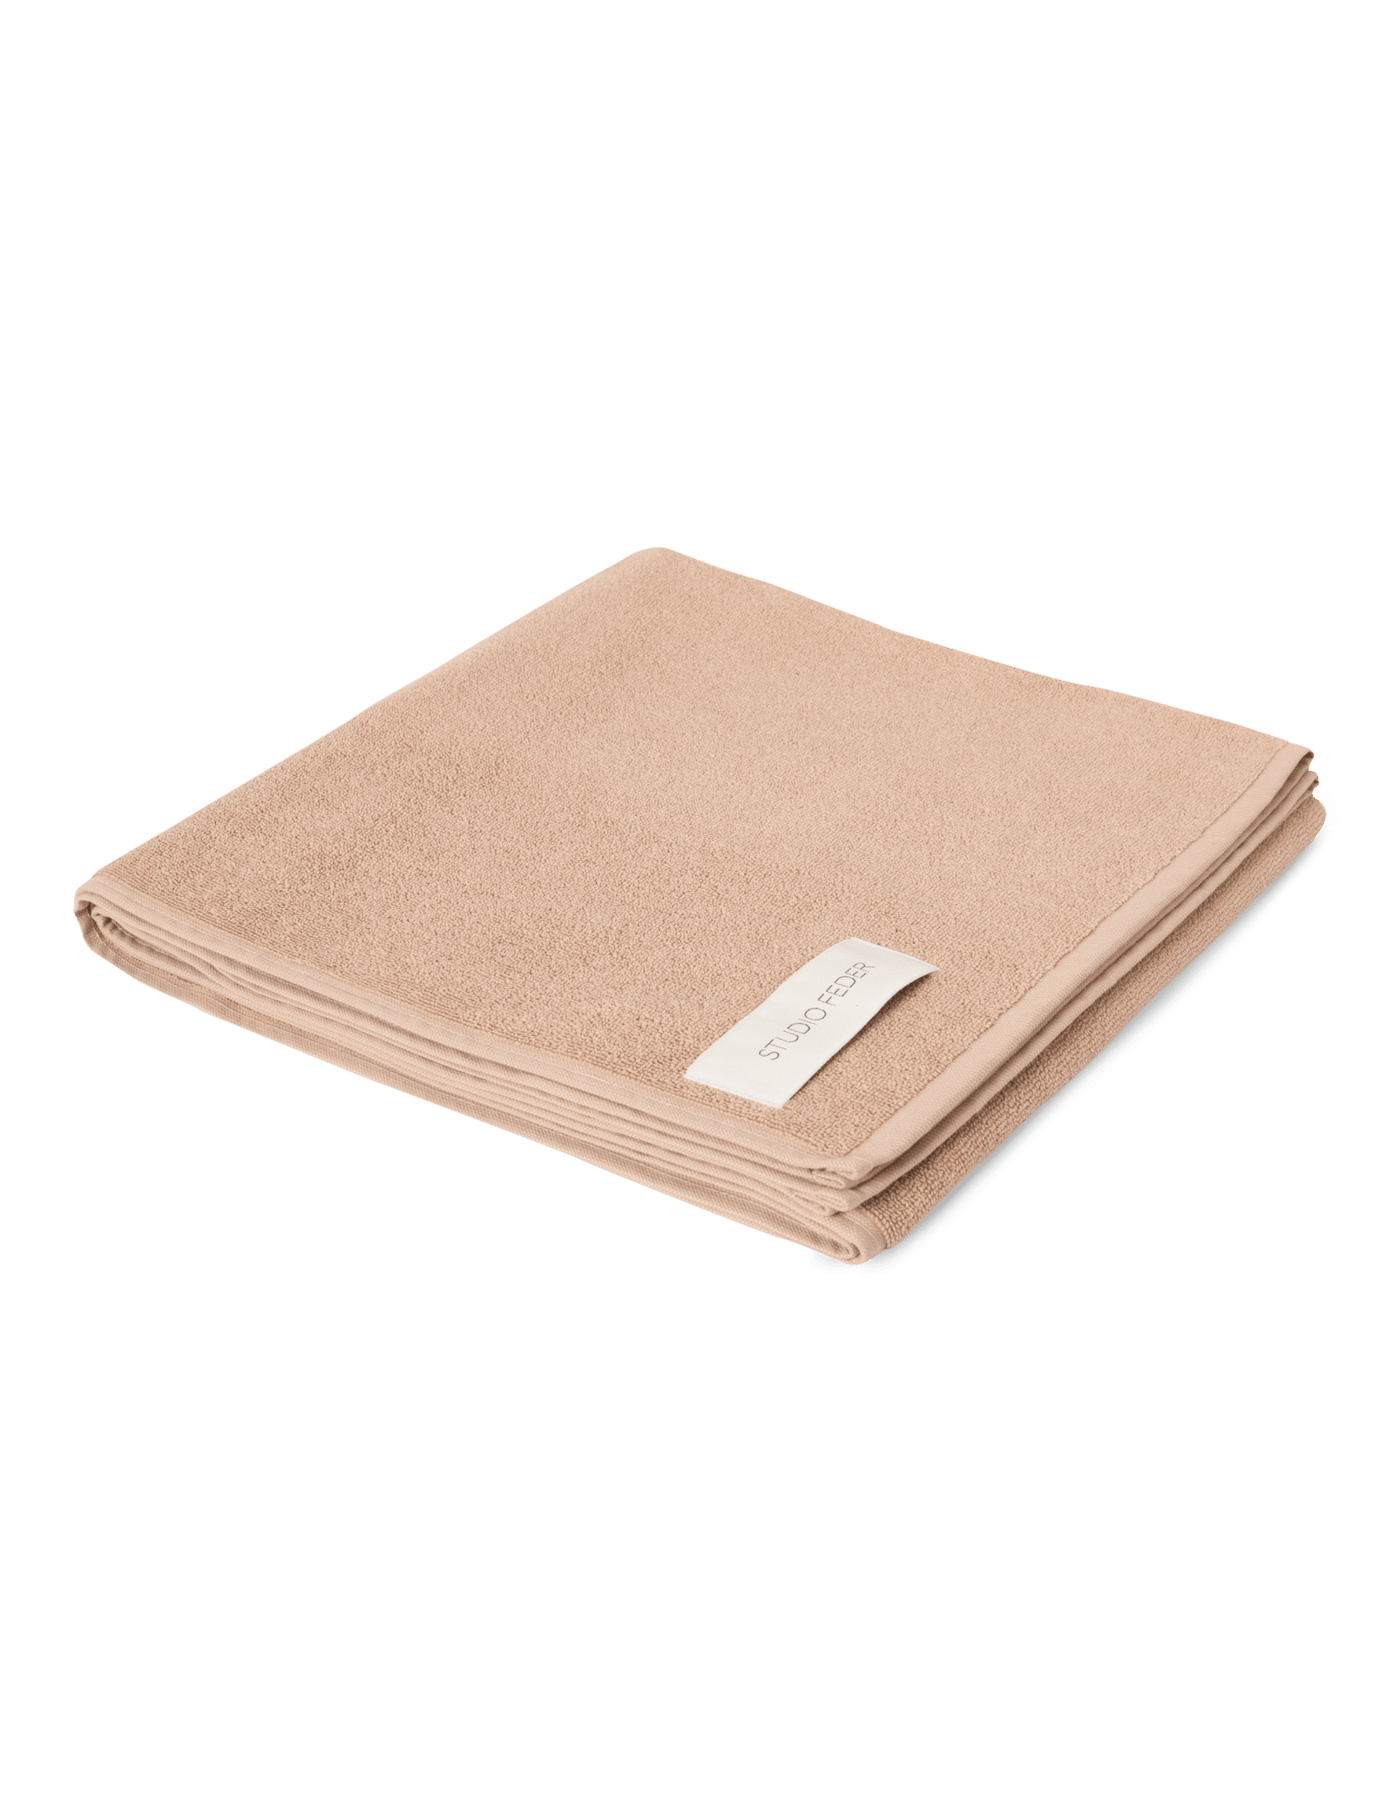 Una Towel - PINK SAND